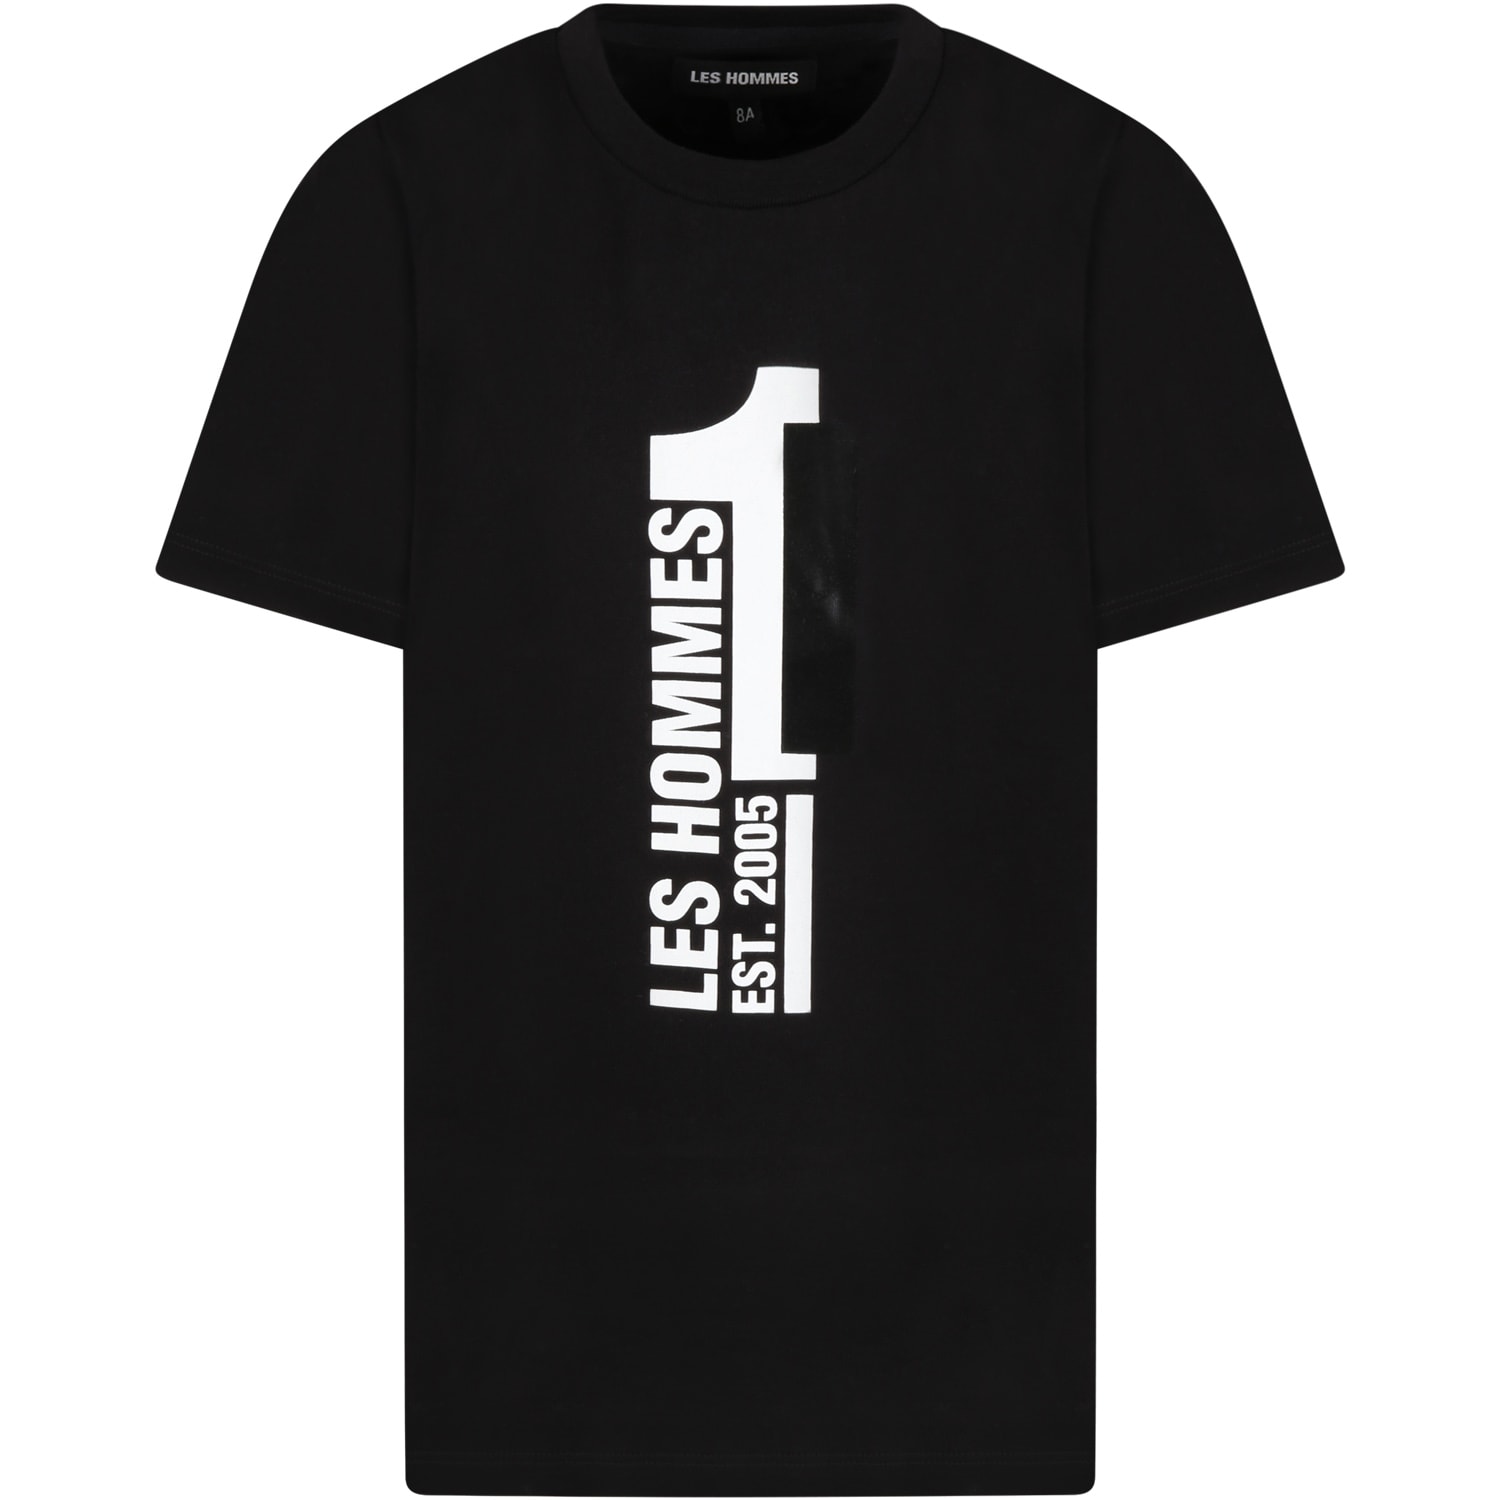 Les Hommes Black T-shirt For Boy With White Logo